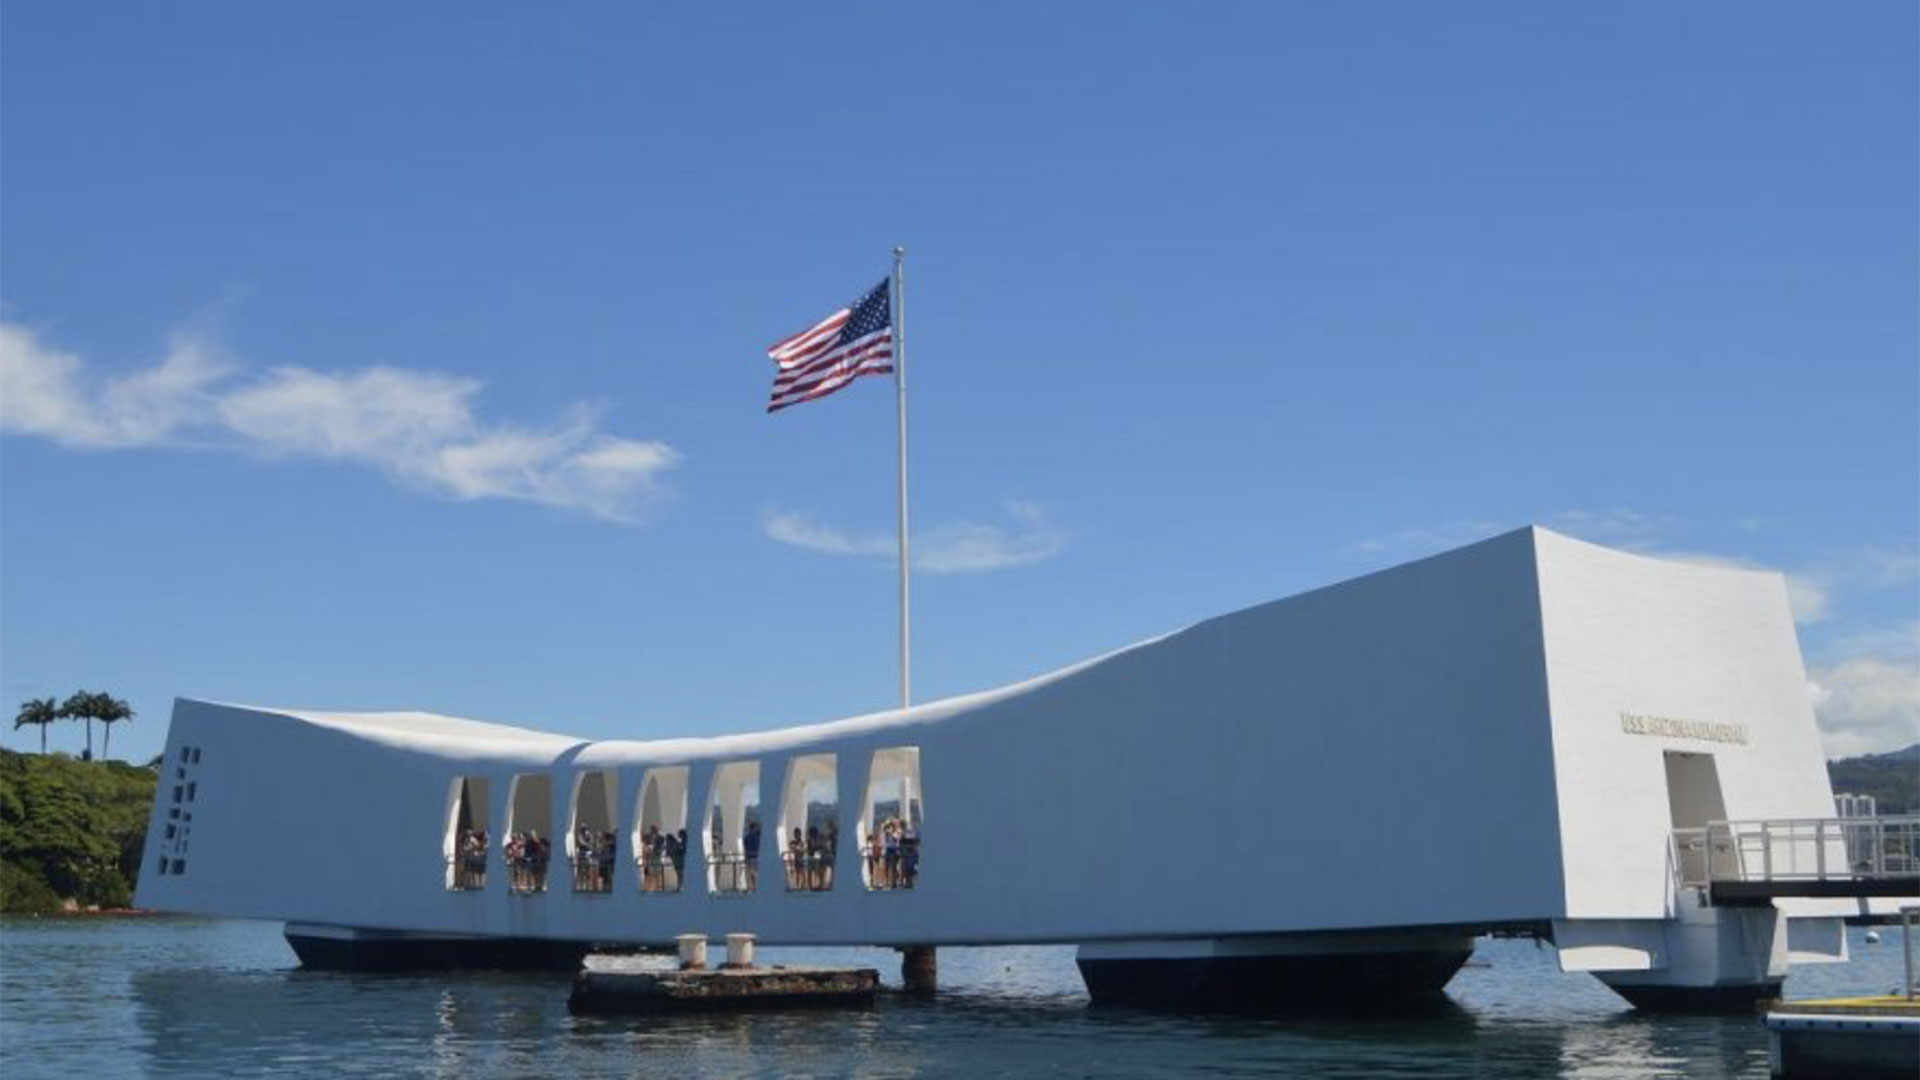 USS Arizona Memorial & Battleship Missouri in Pearl Harbor 02